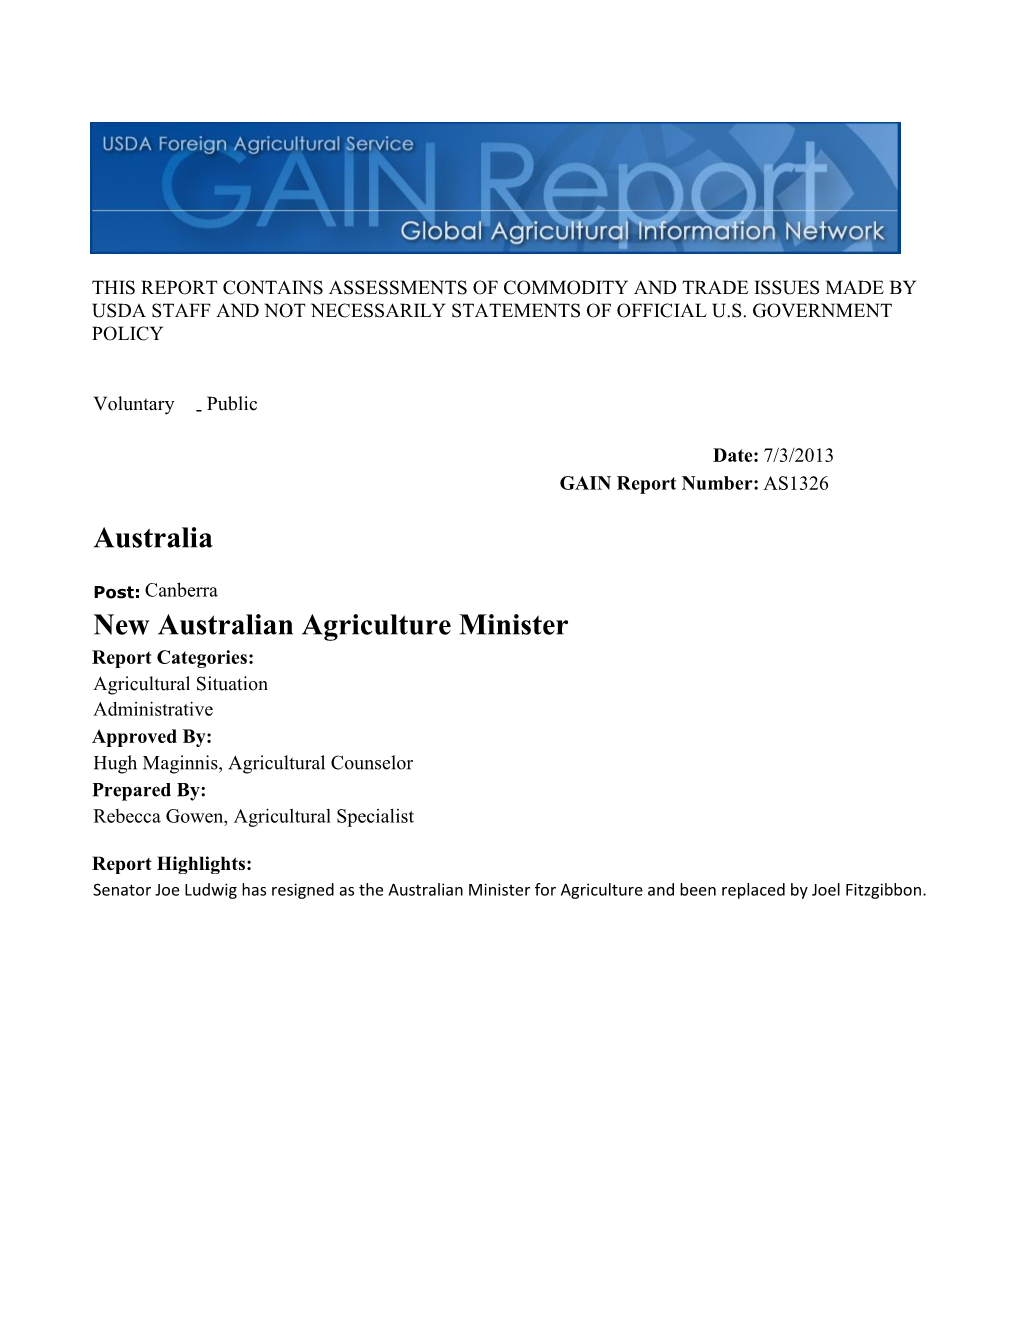 New Australian Agriculture Minister Australia